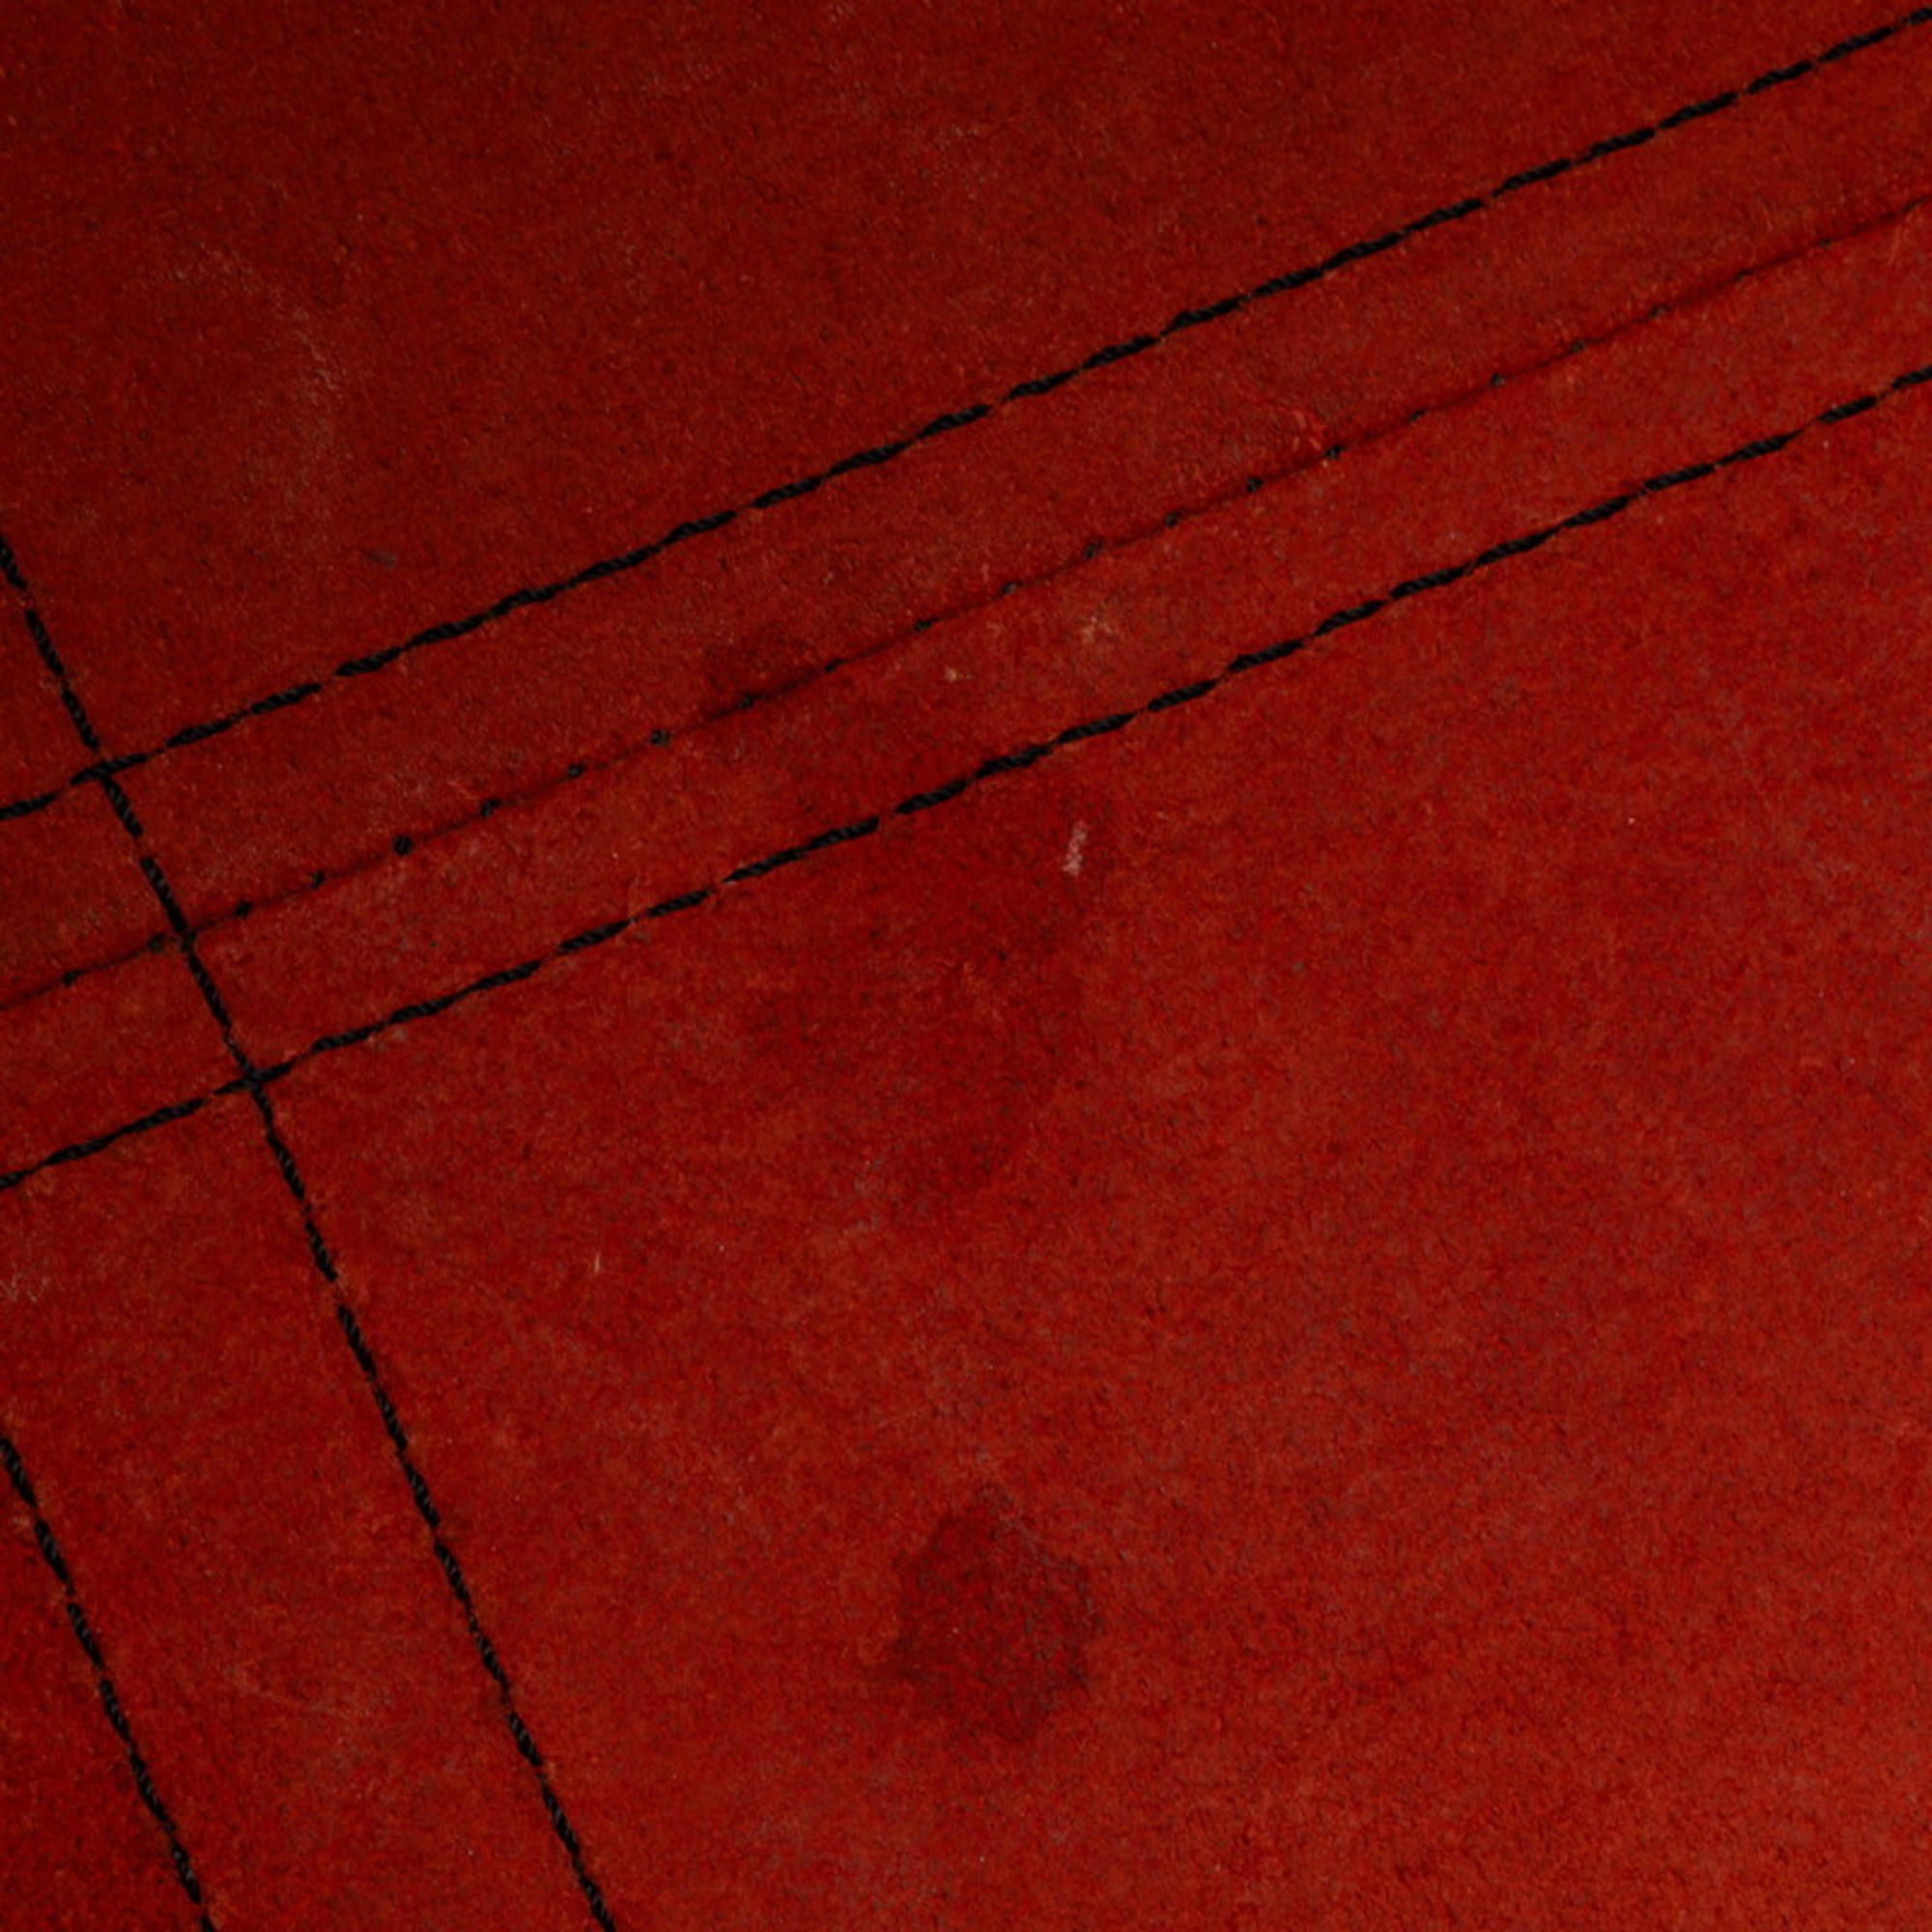 Louis Vuitton Epi Keepall 50 Boston Bag Travel M42967 Castilian Red Leather Women's LOUIS VUITTON